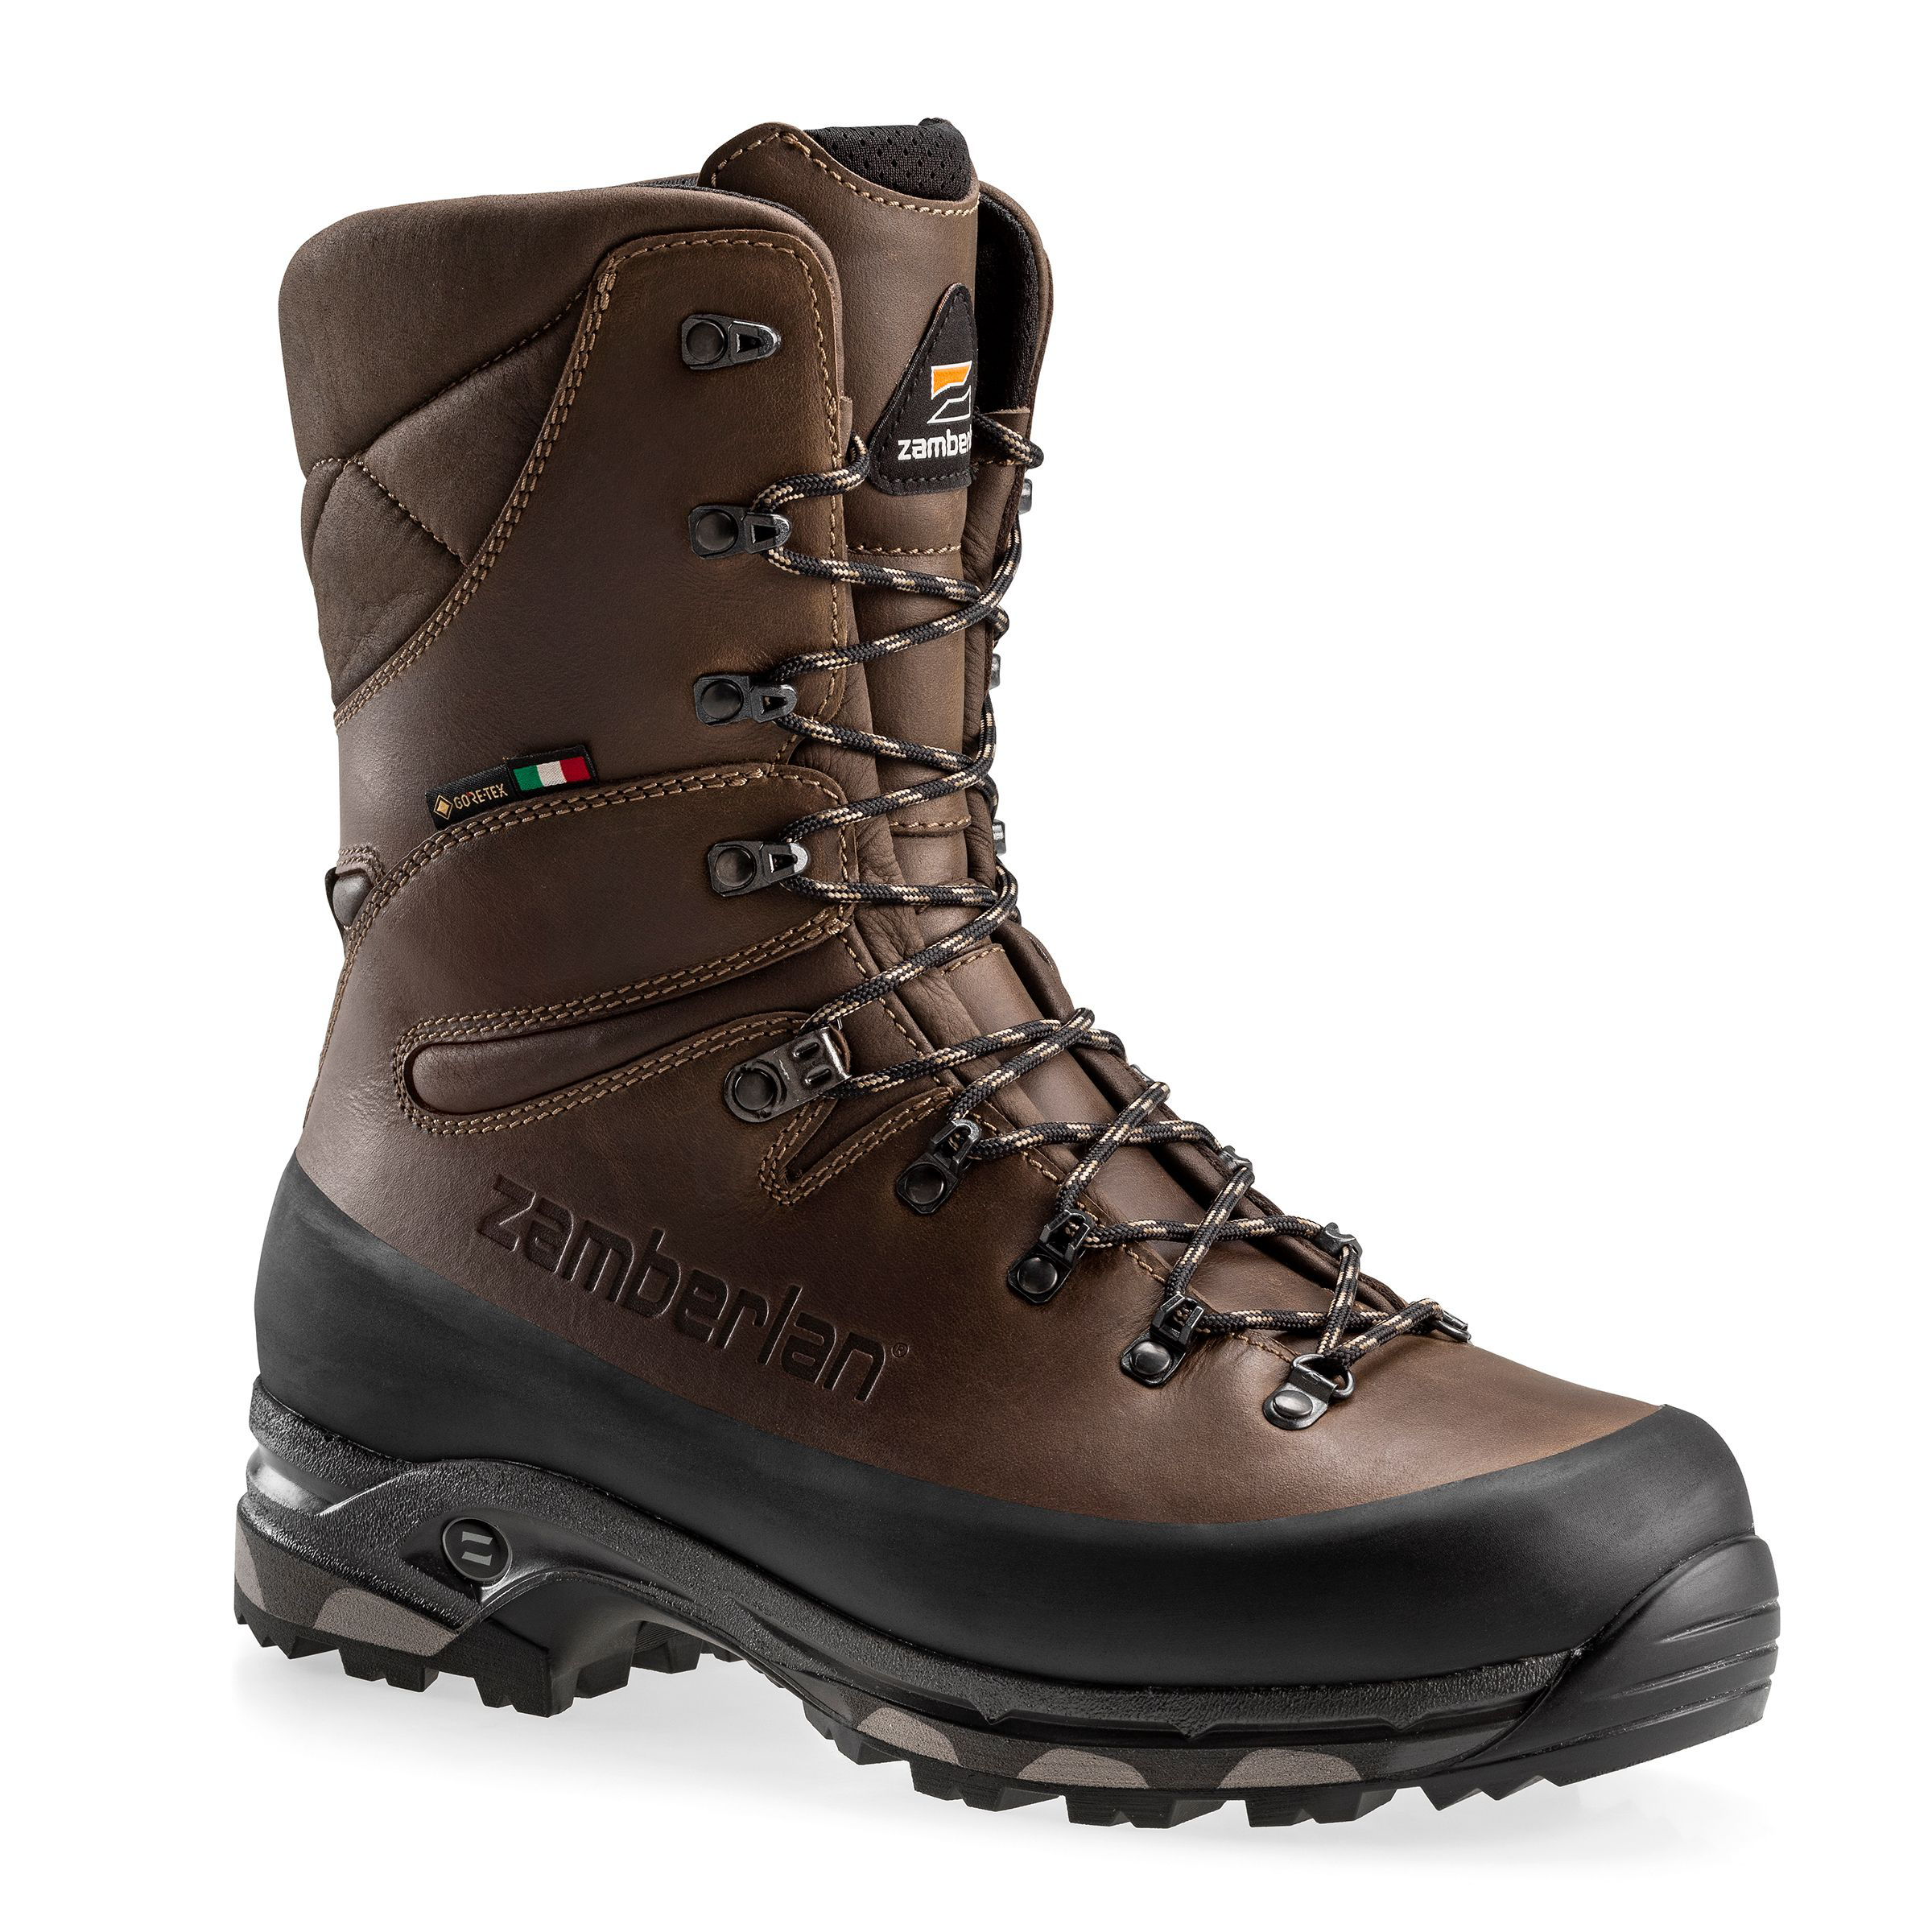 Zamberlan 1005 Hunter Pro GTX RR WL GORE-TEX Insulated Hunting Boots for Men